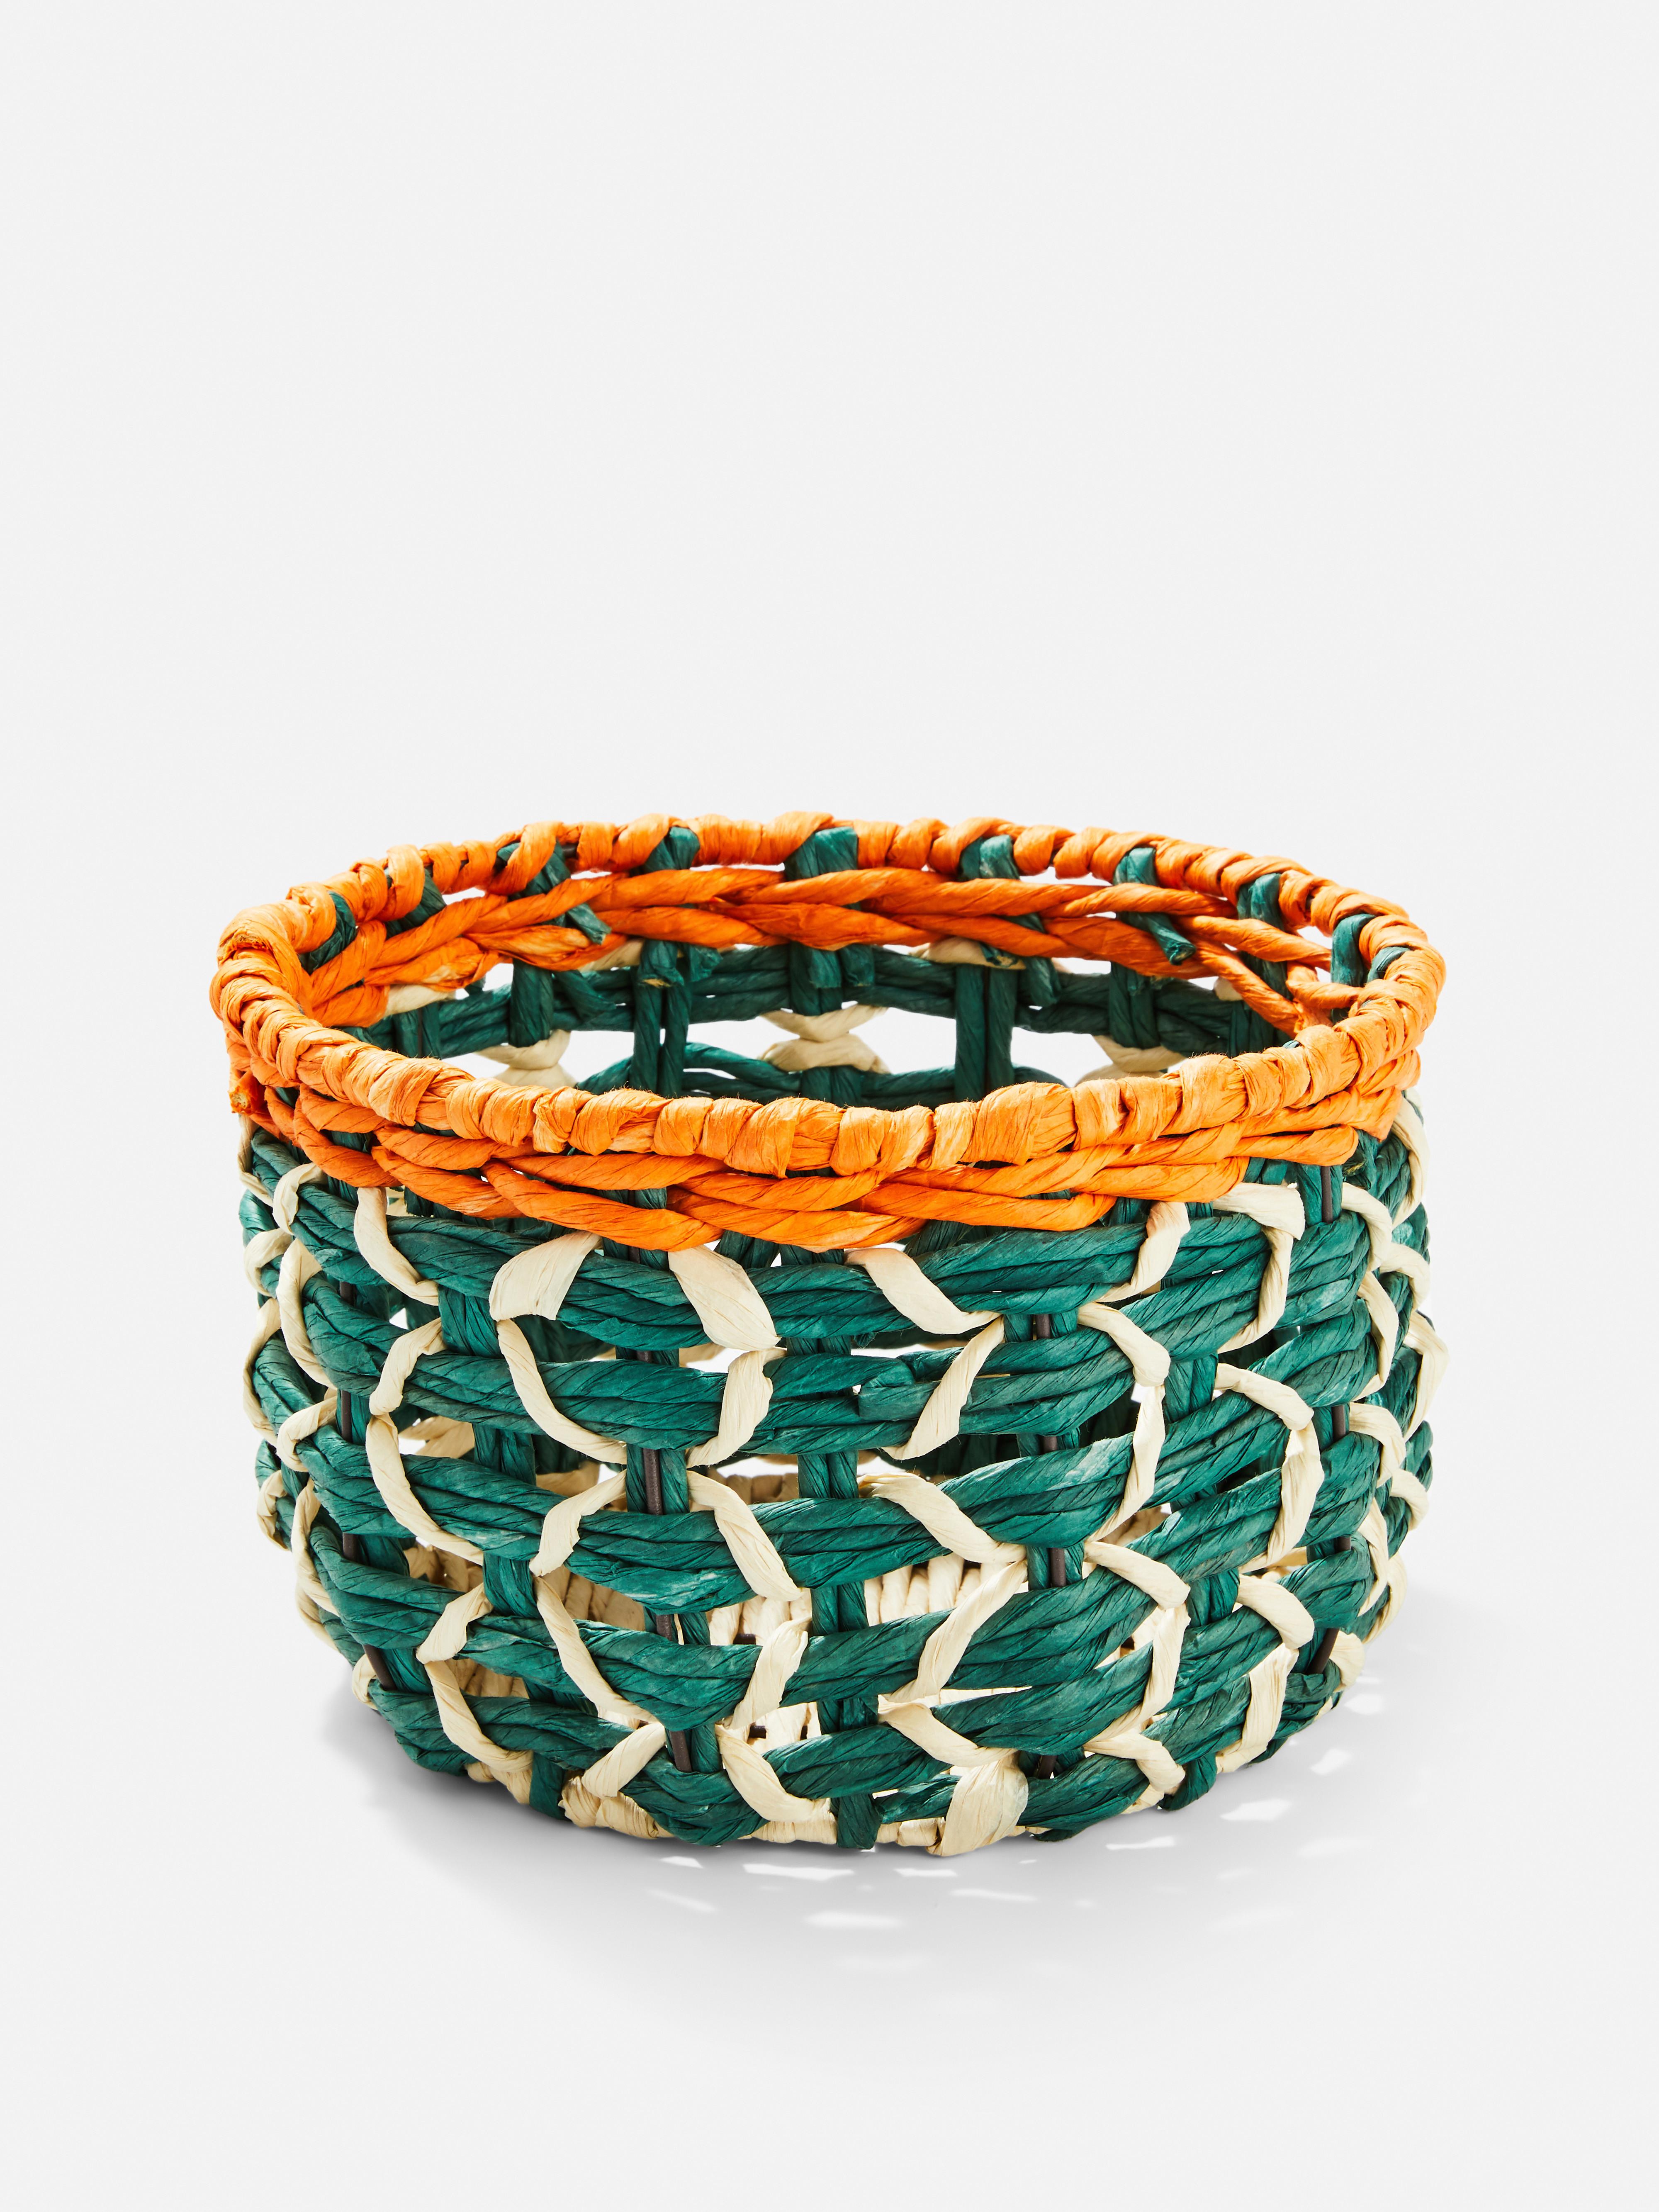 Tricoloured Weaved Basket